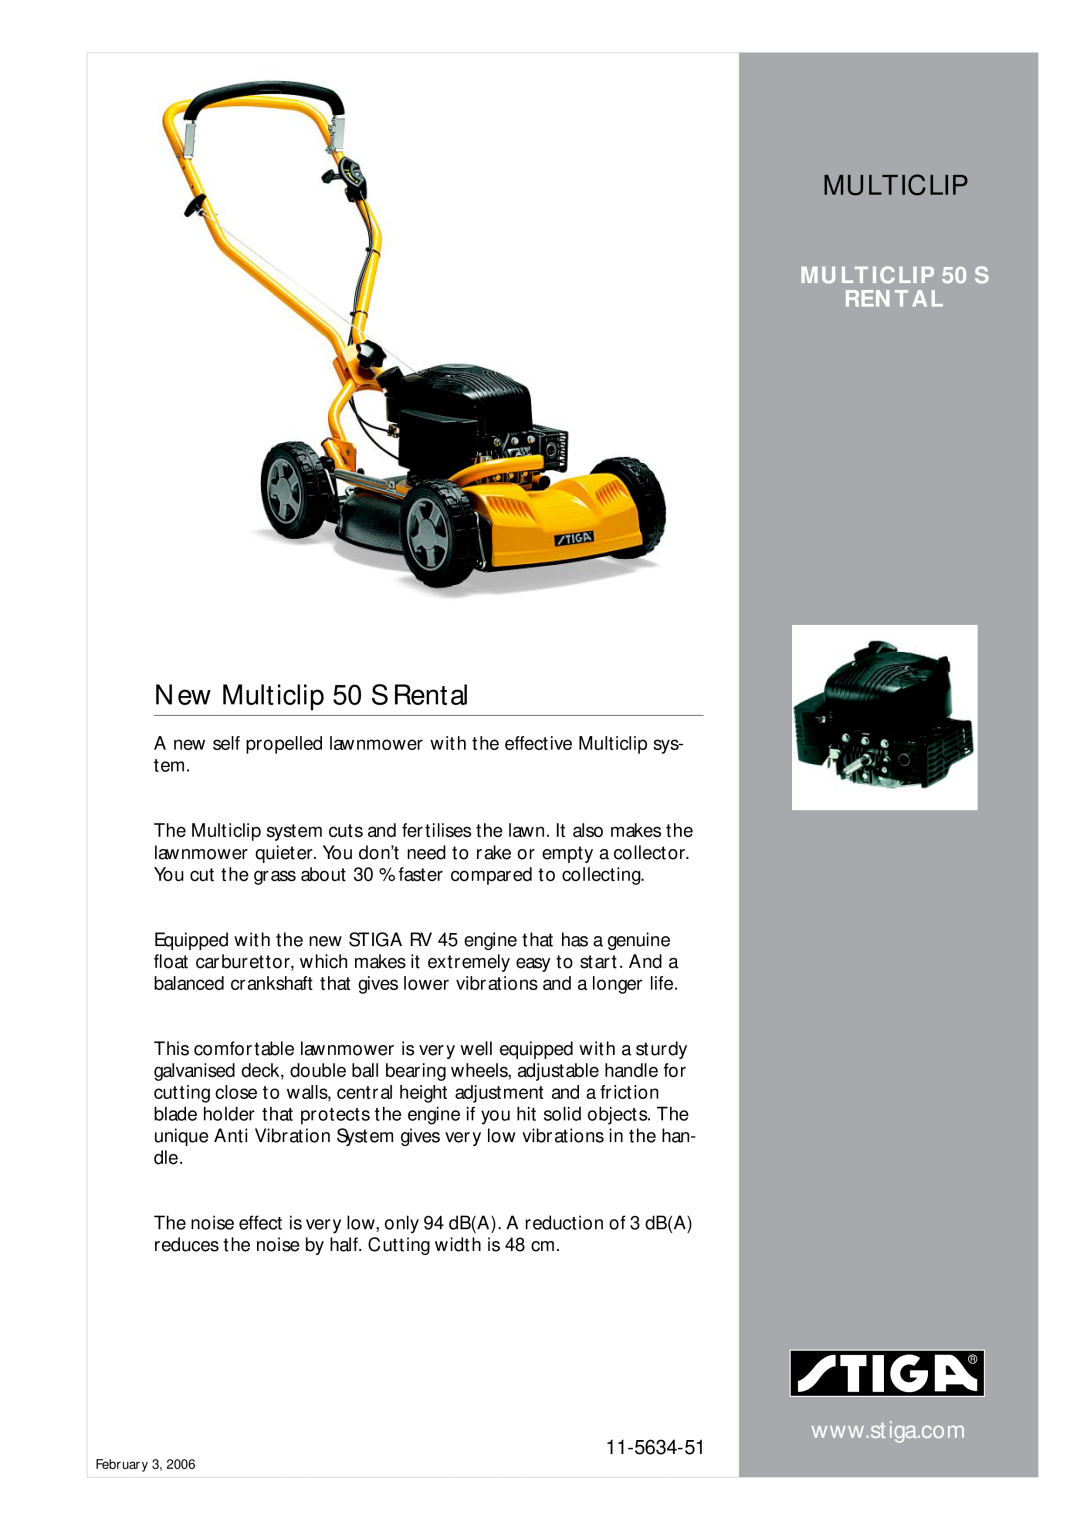 Stiga manual New Multiclip 50 S Rental, MULTICLIP 50 S RENTAL, 11-5634-51 